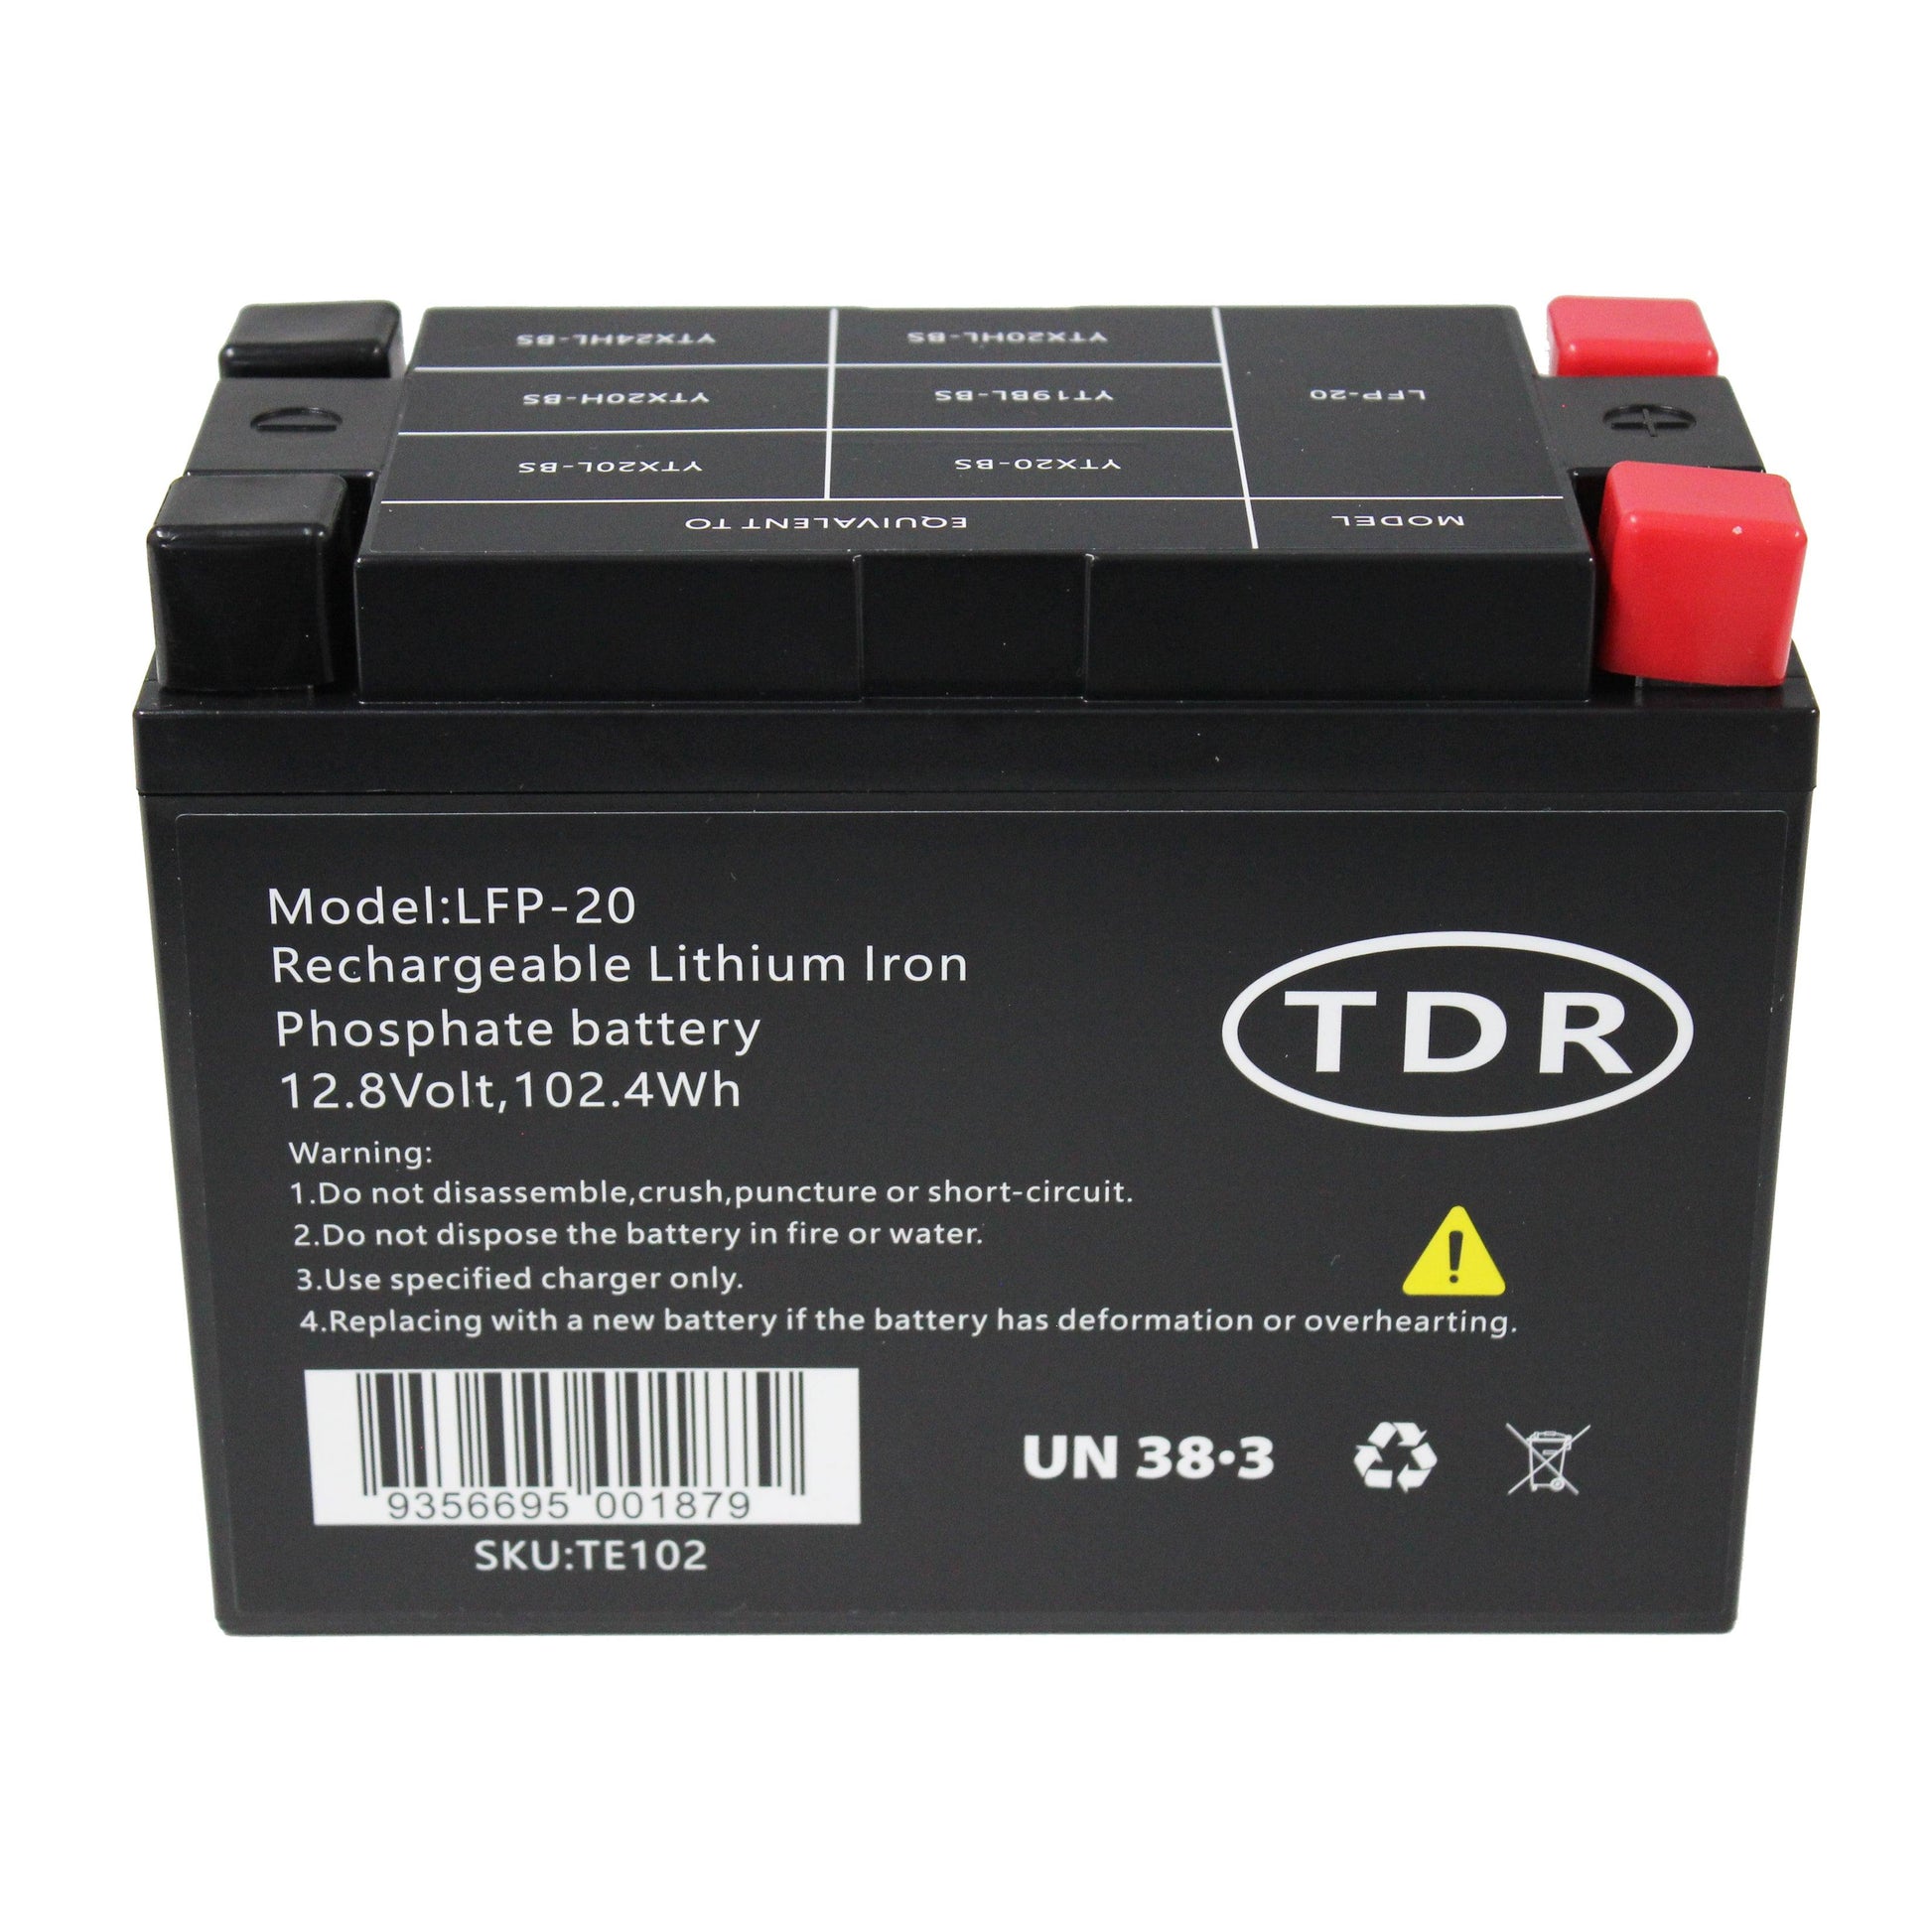 TDR LFP-20 Lithium Motorcycle Battery Replace YTX20-BS YTX20L-BS YT19BL-BS YTX20H-BS YTX20HL-BS YTX24HL-BS - TDRMOTO